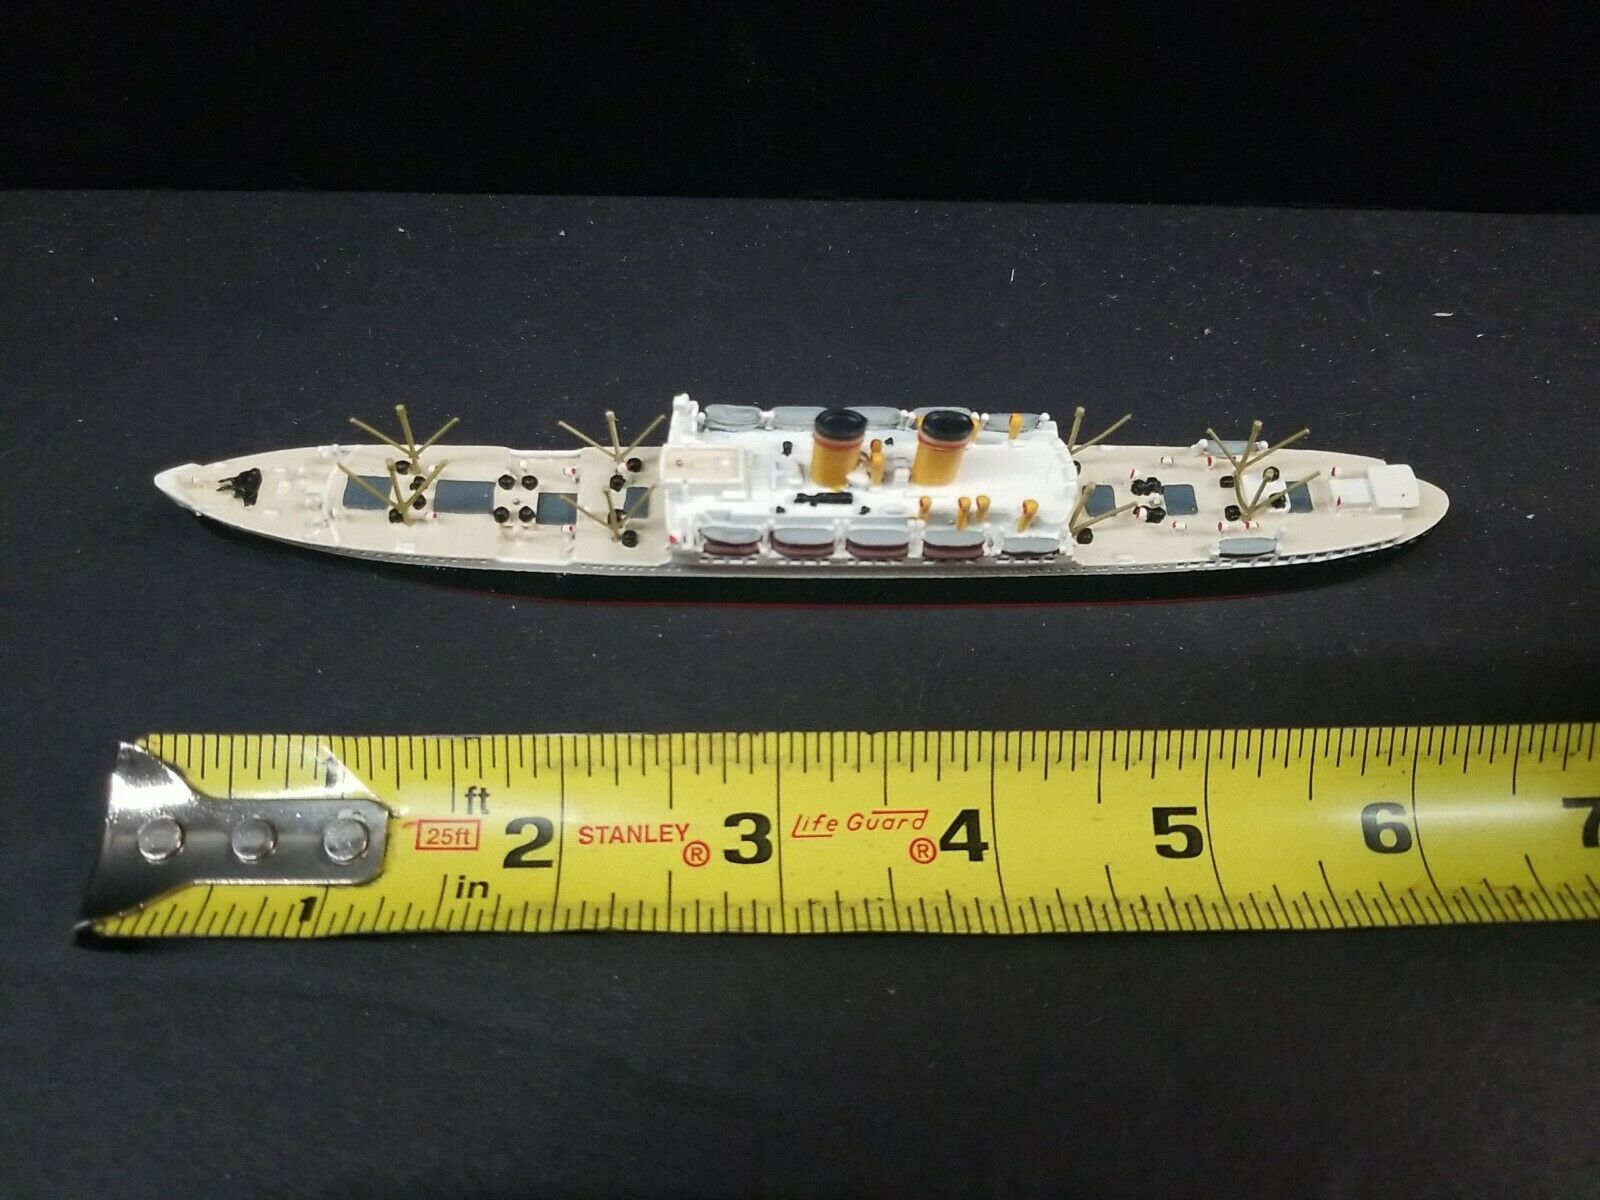 Details about   1/1250 NORMANDIE Atlas Transatlantic Boat Ship Replica Alloy Model Toy Collect